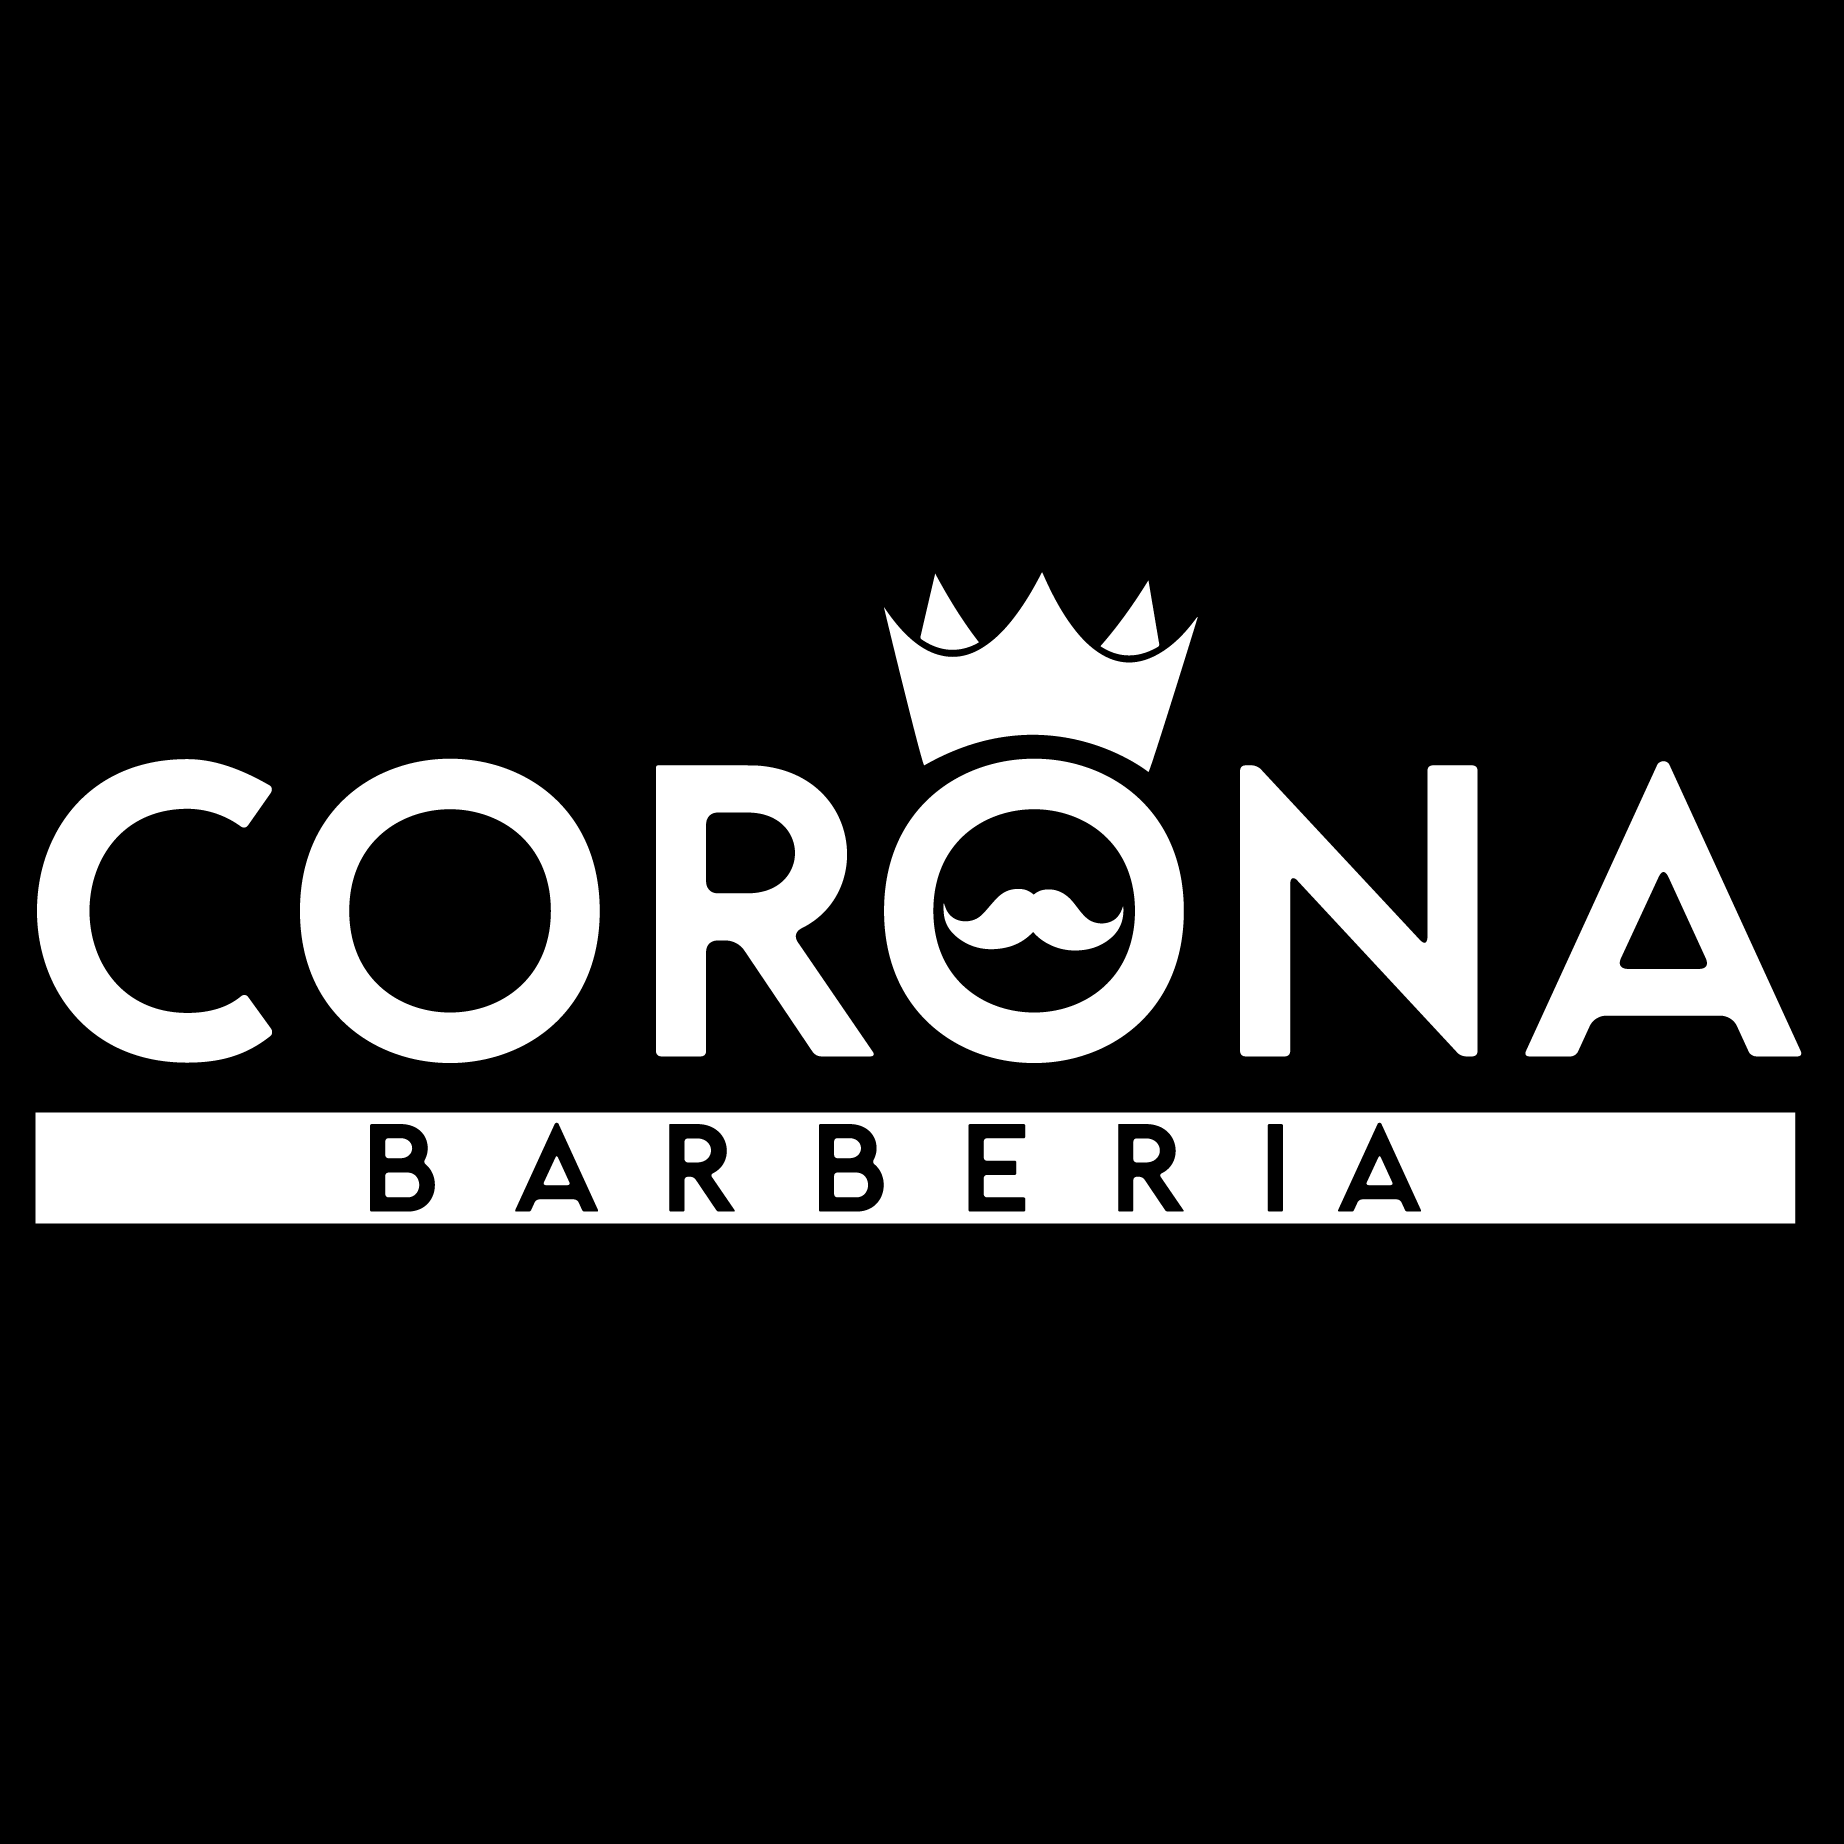 BARBERIA CORONA logo